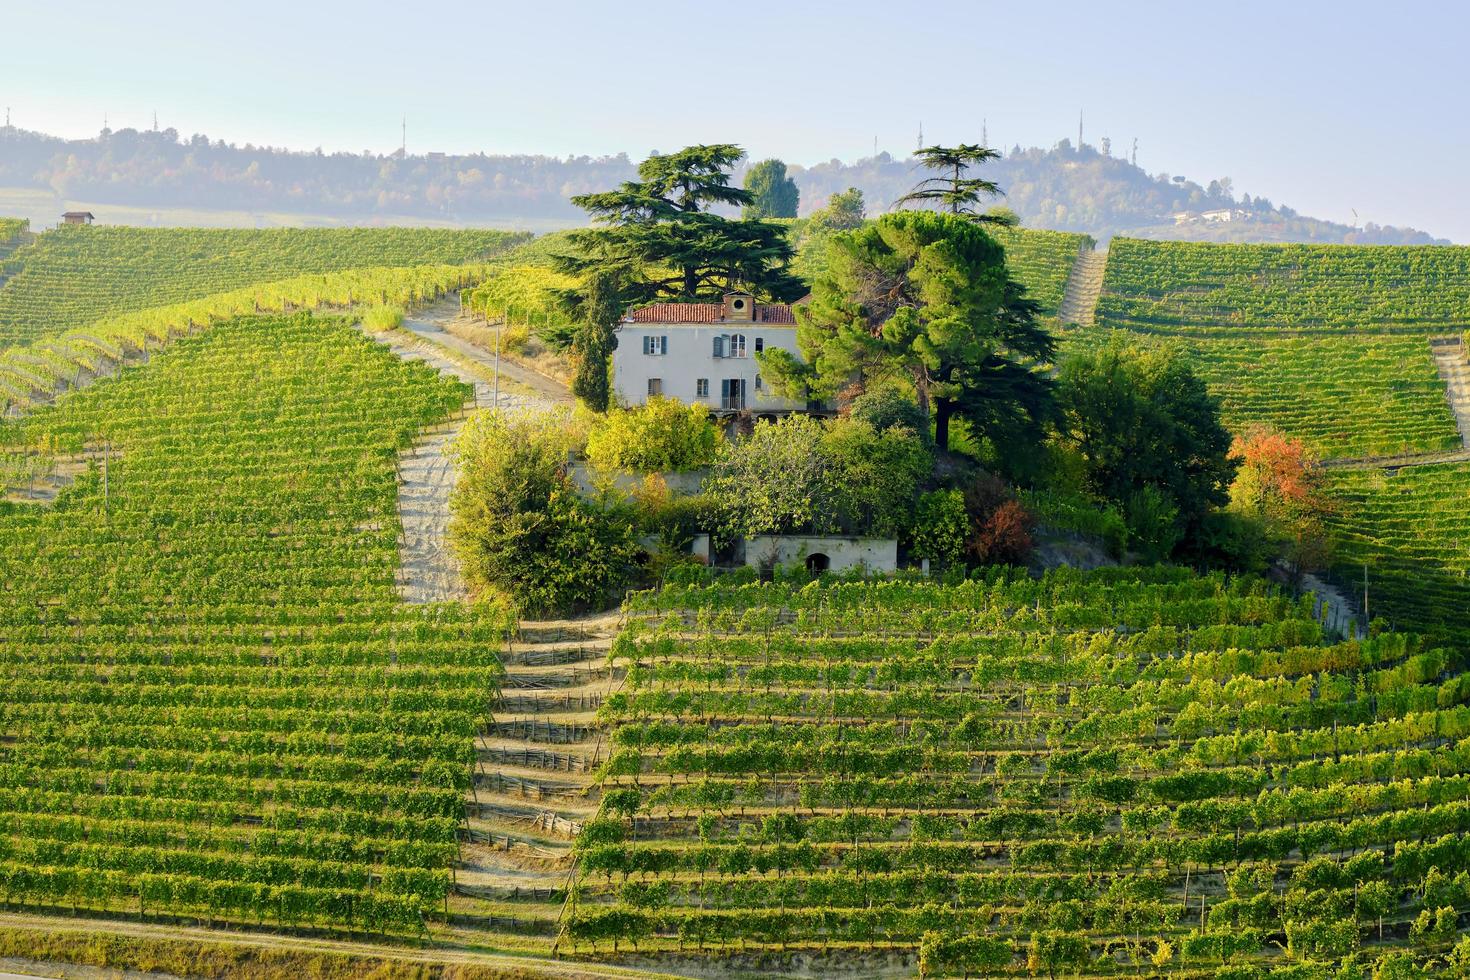 Barolo, Italy, 2021 - Farm surrounded by vineyards photo